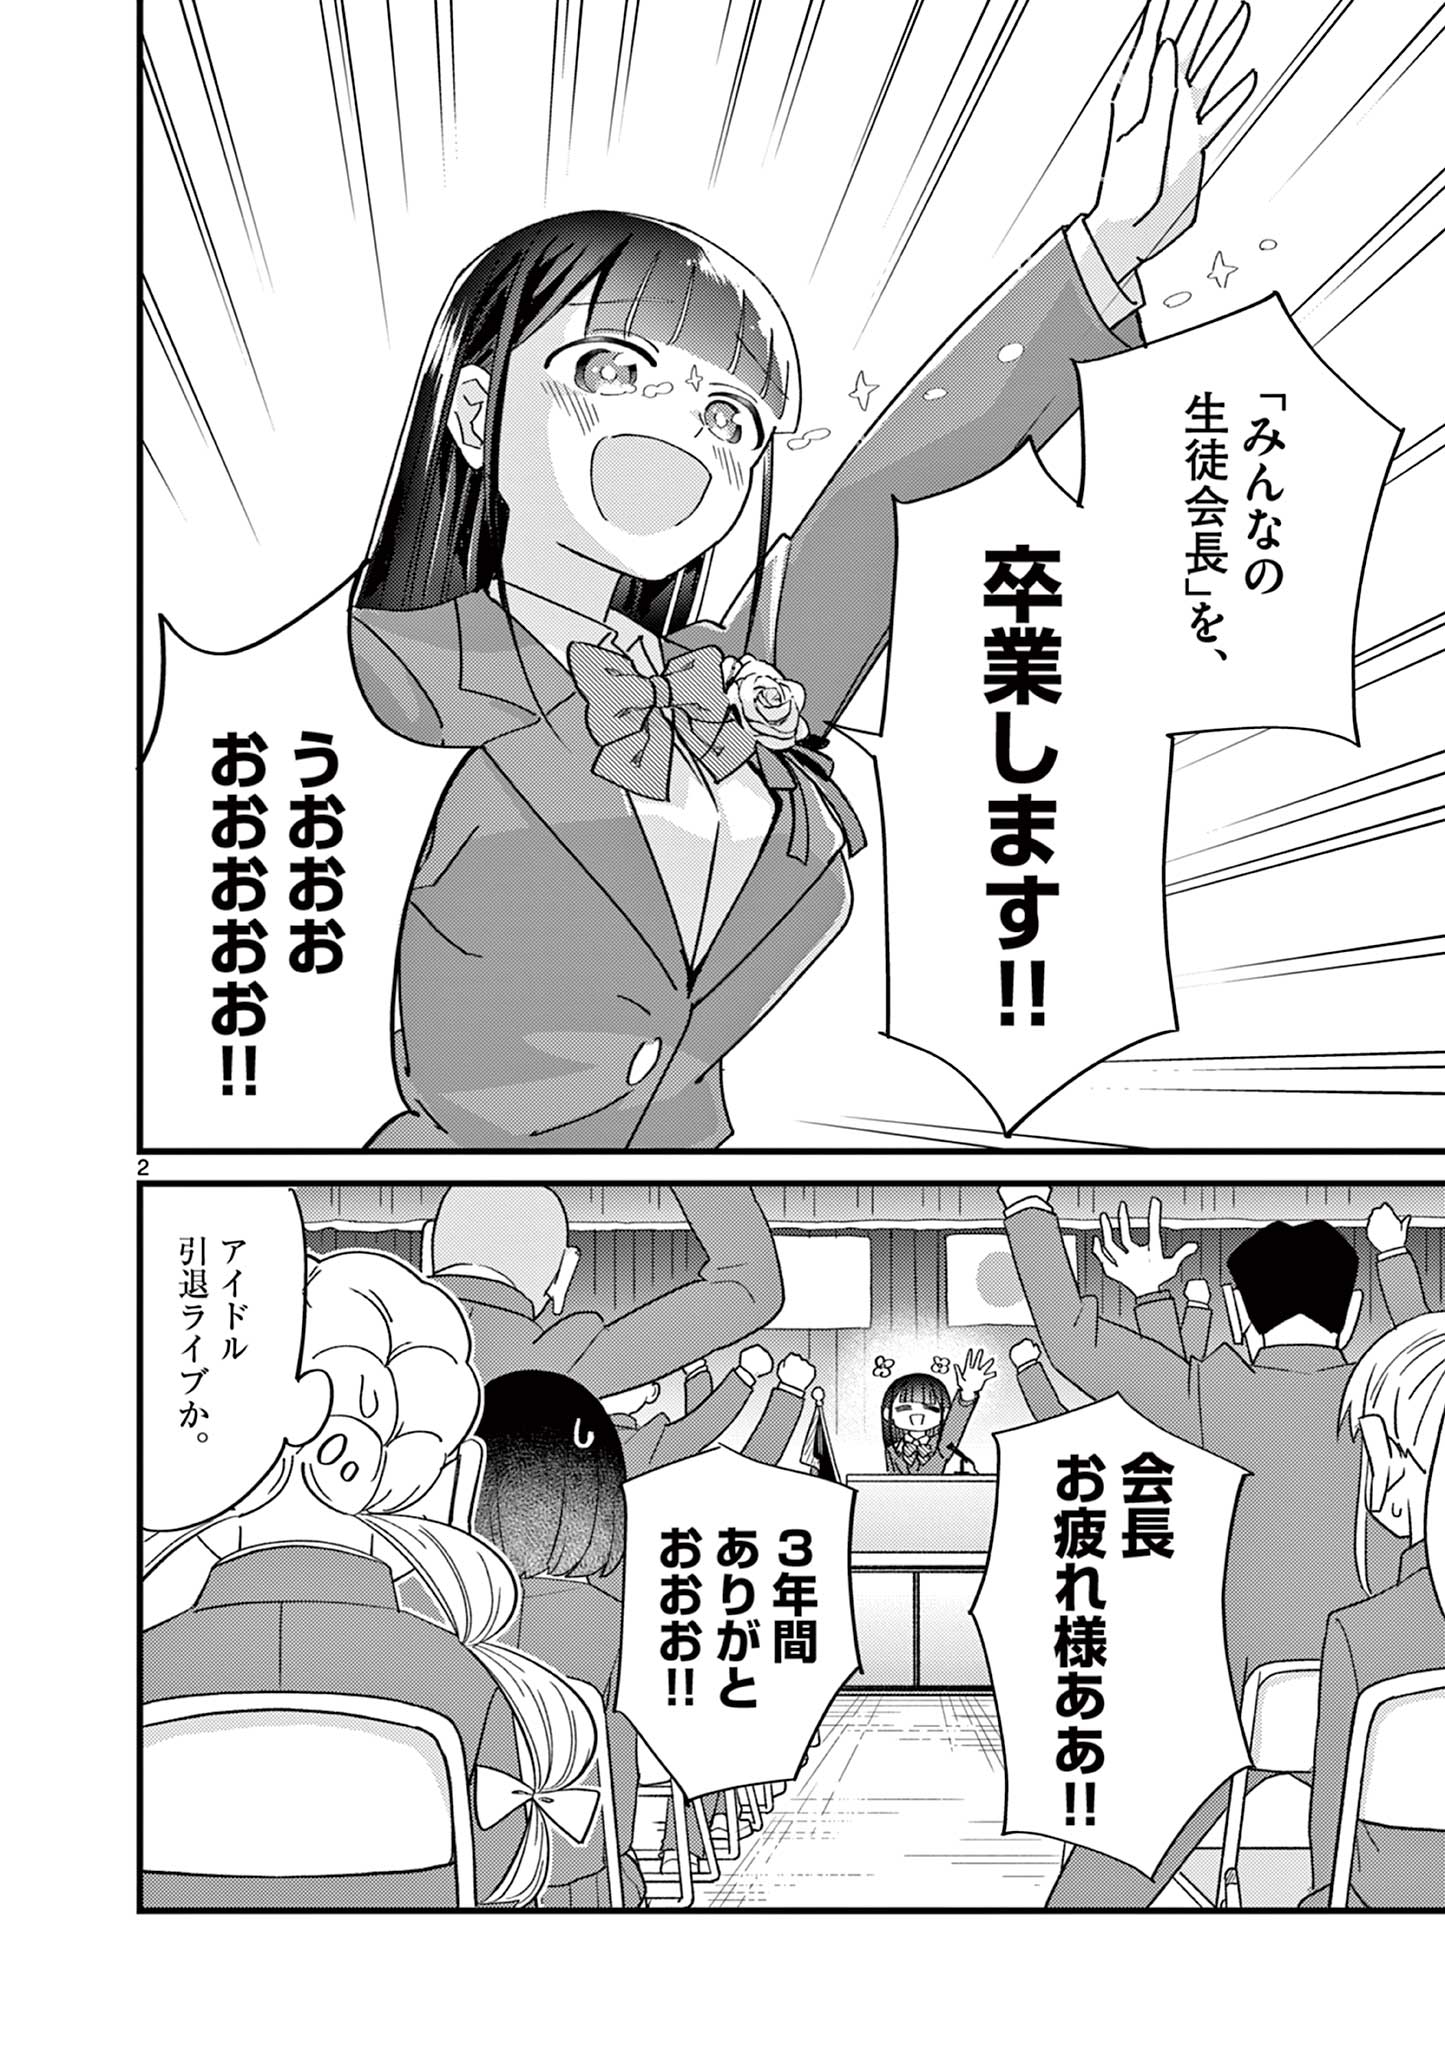 Ranka-chan wa Bitch ni Naritai - Chapter 24 - Page 2